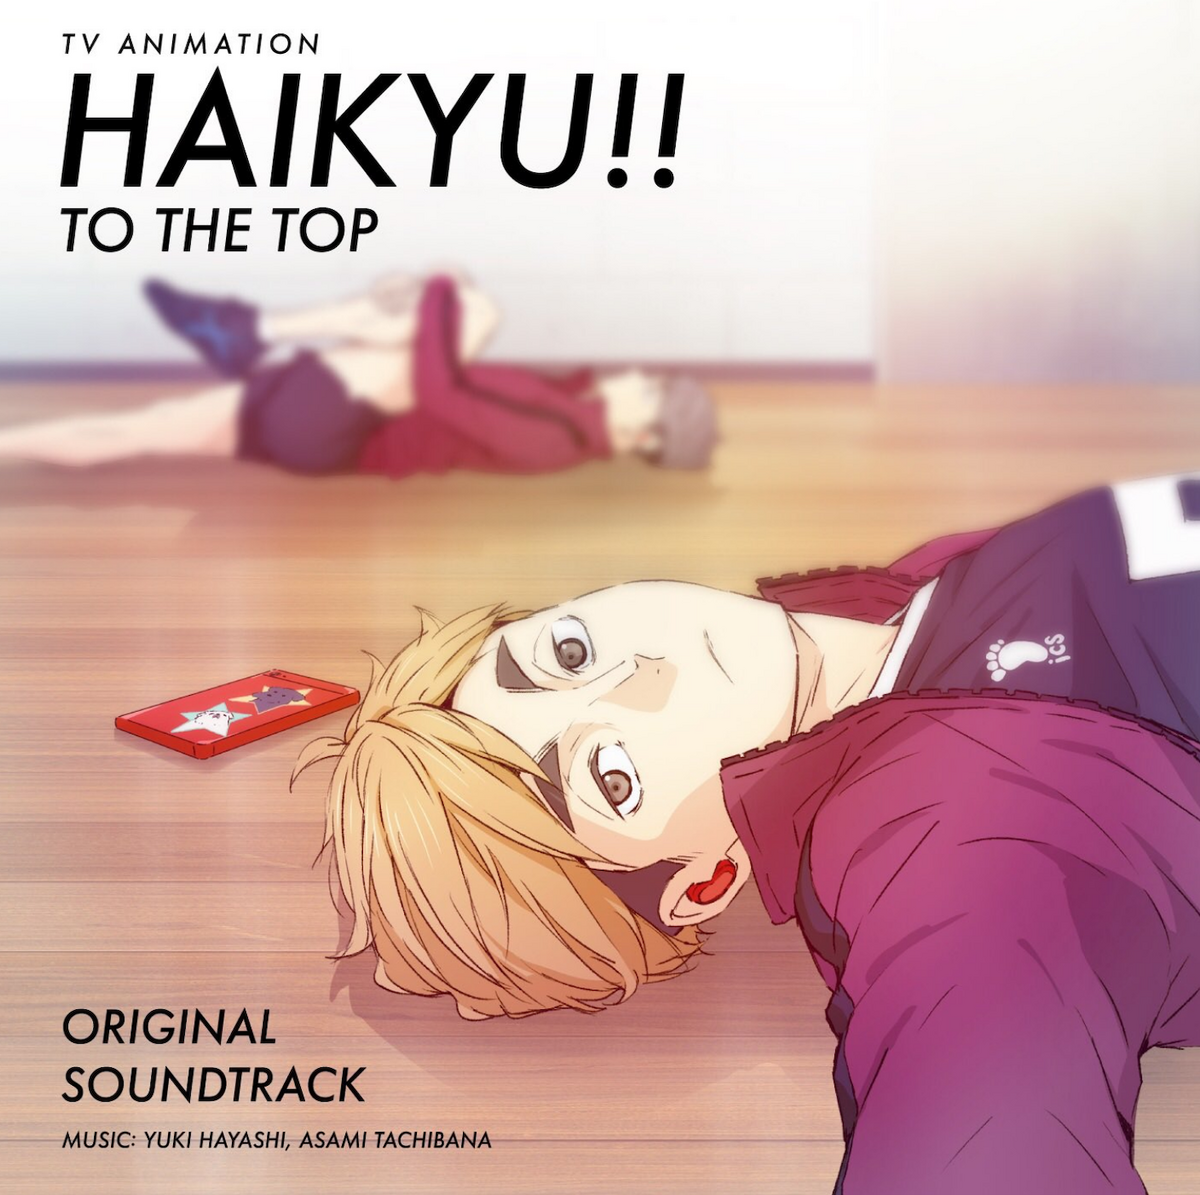 Haikyuu!! To the Top S2 Episode 10